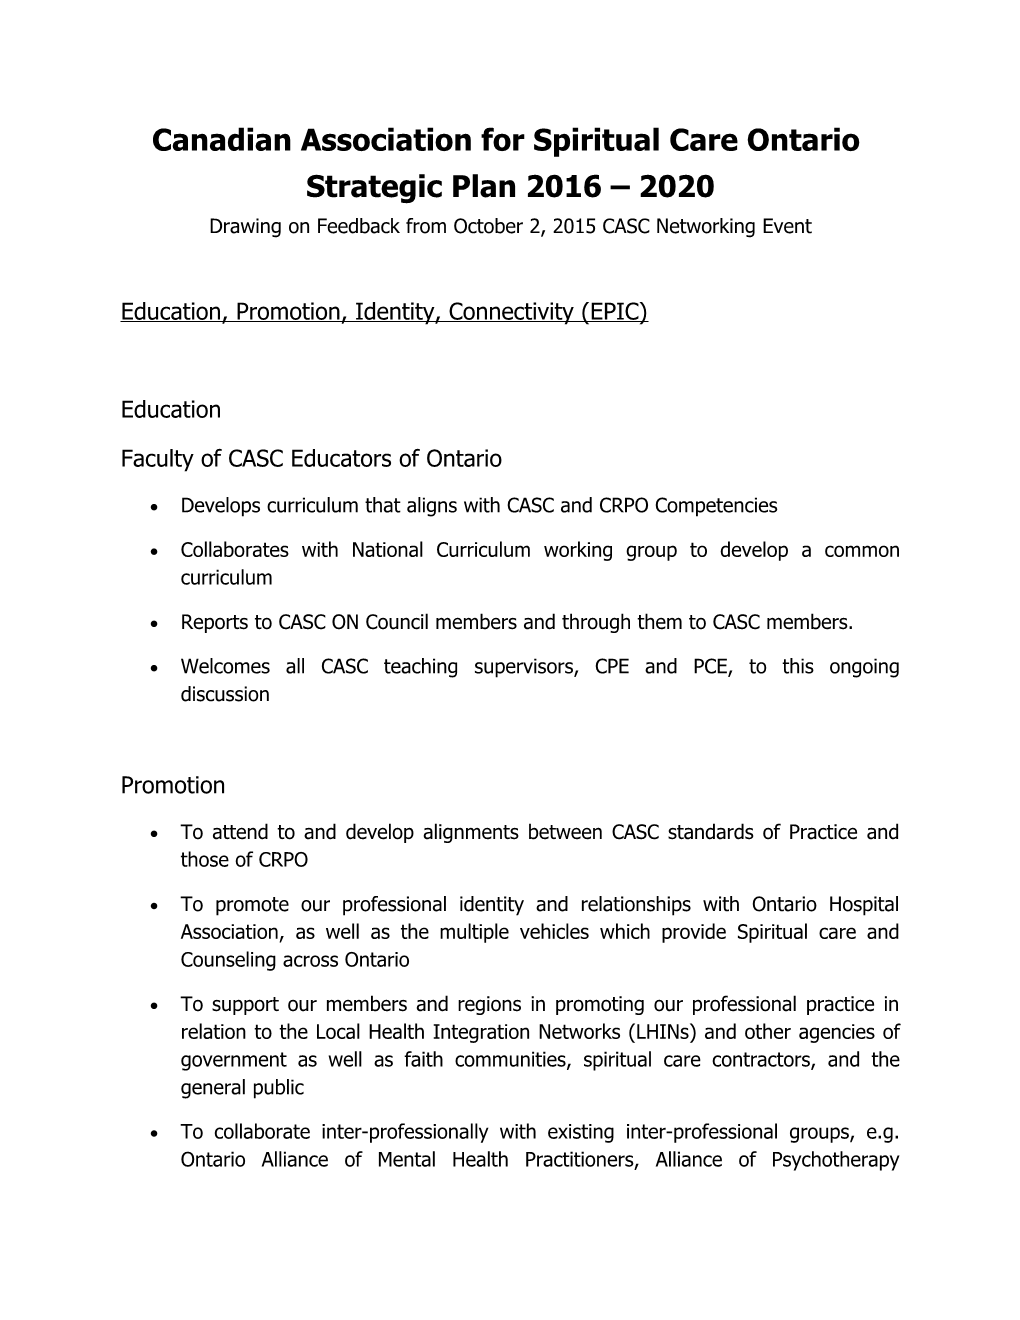 CASC Ontario Strategic Plan 2016 2020